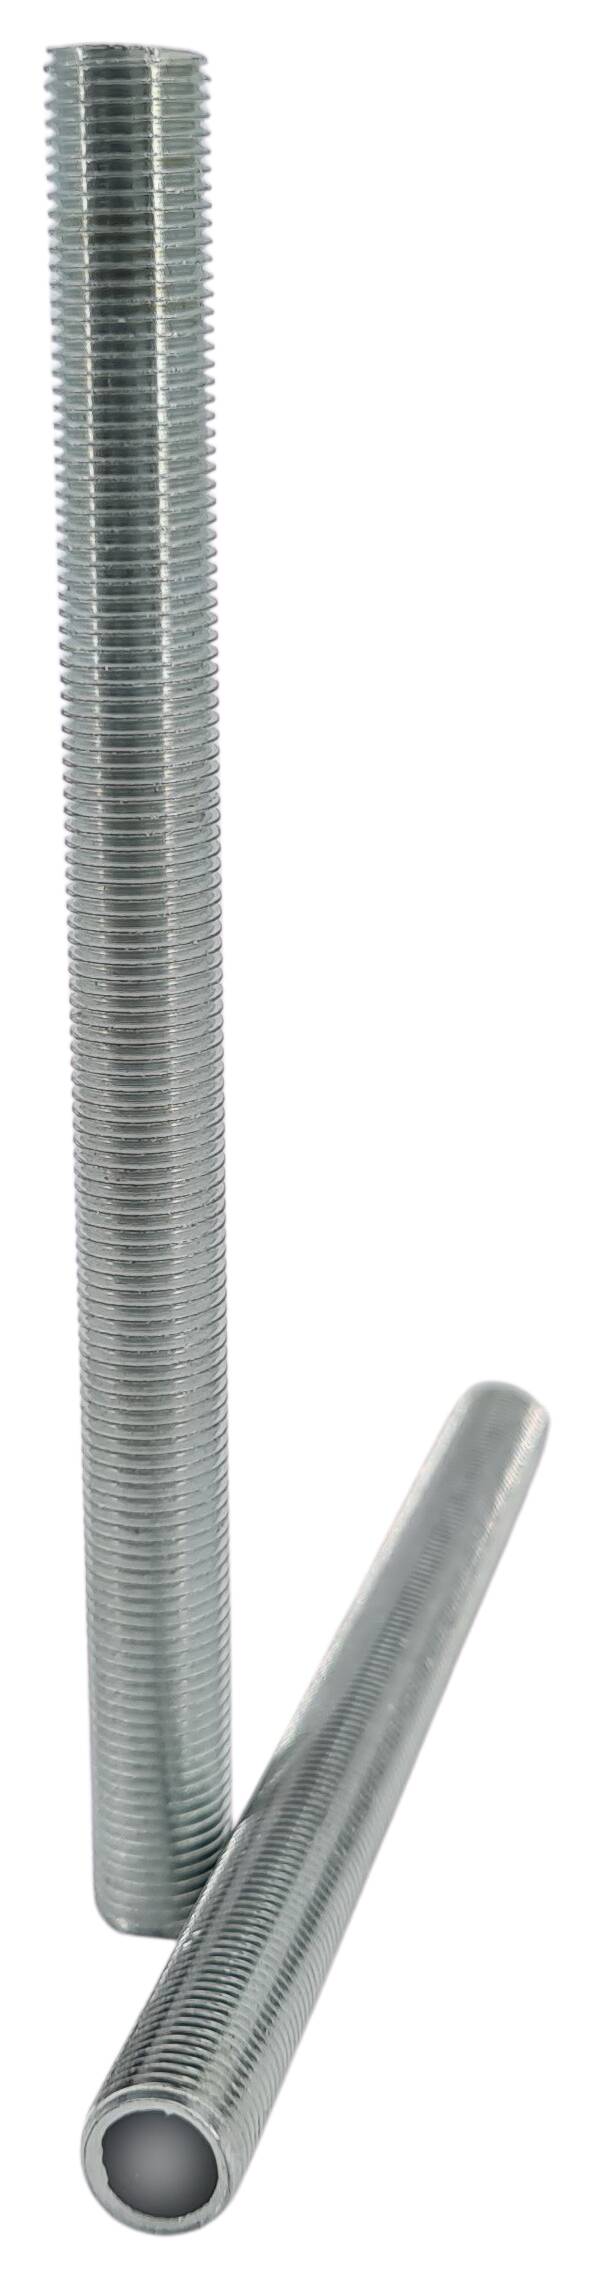 iron thread tube M10x1x105 round zinc